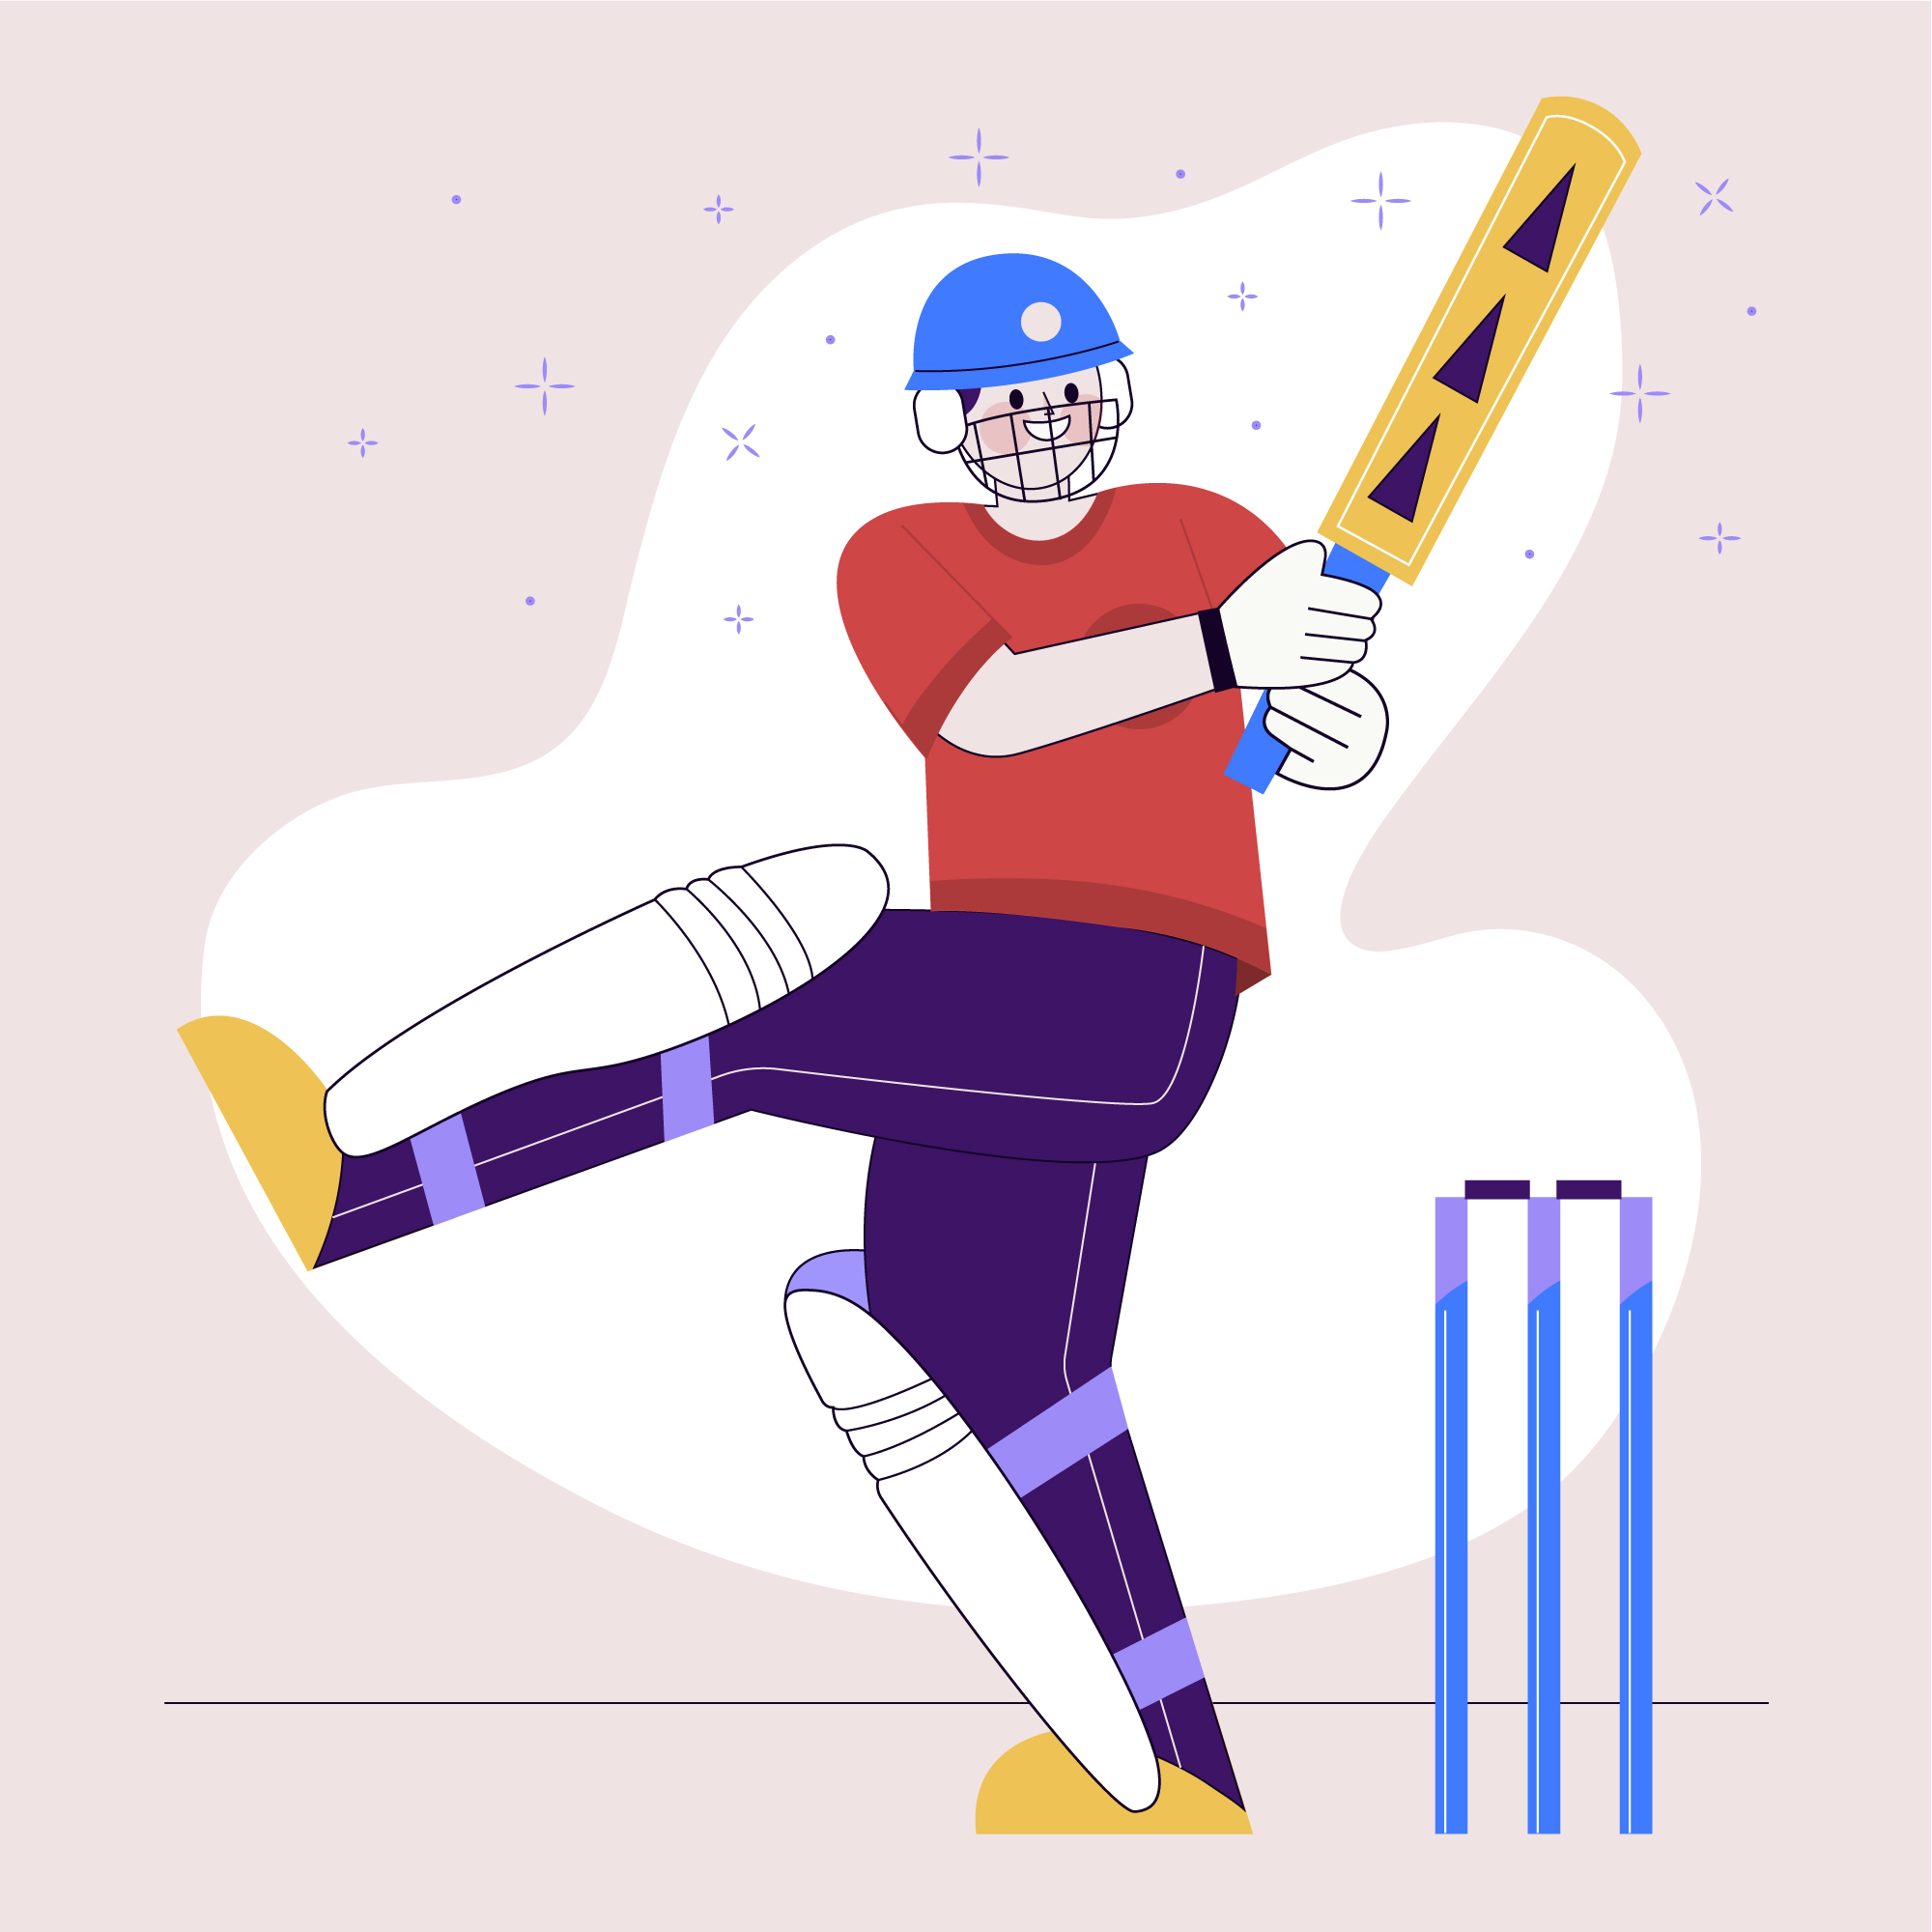 Is Cricket An Entertaining Sport?